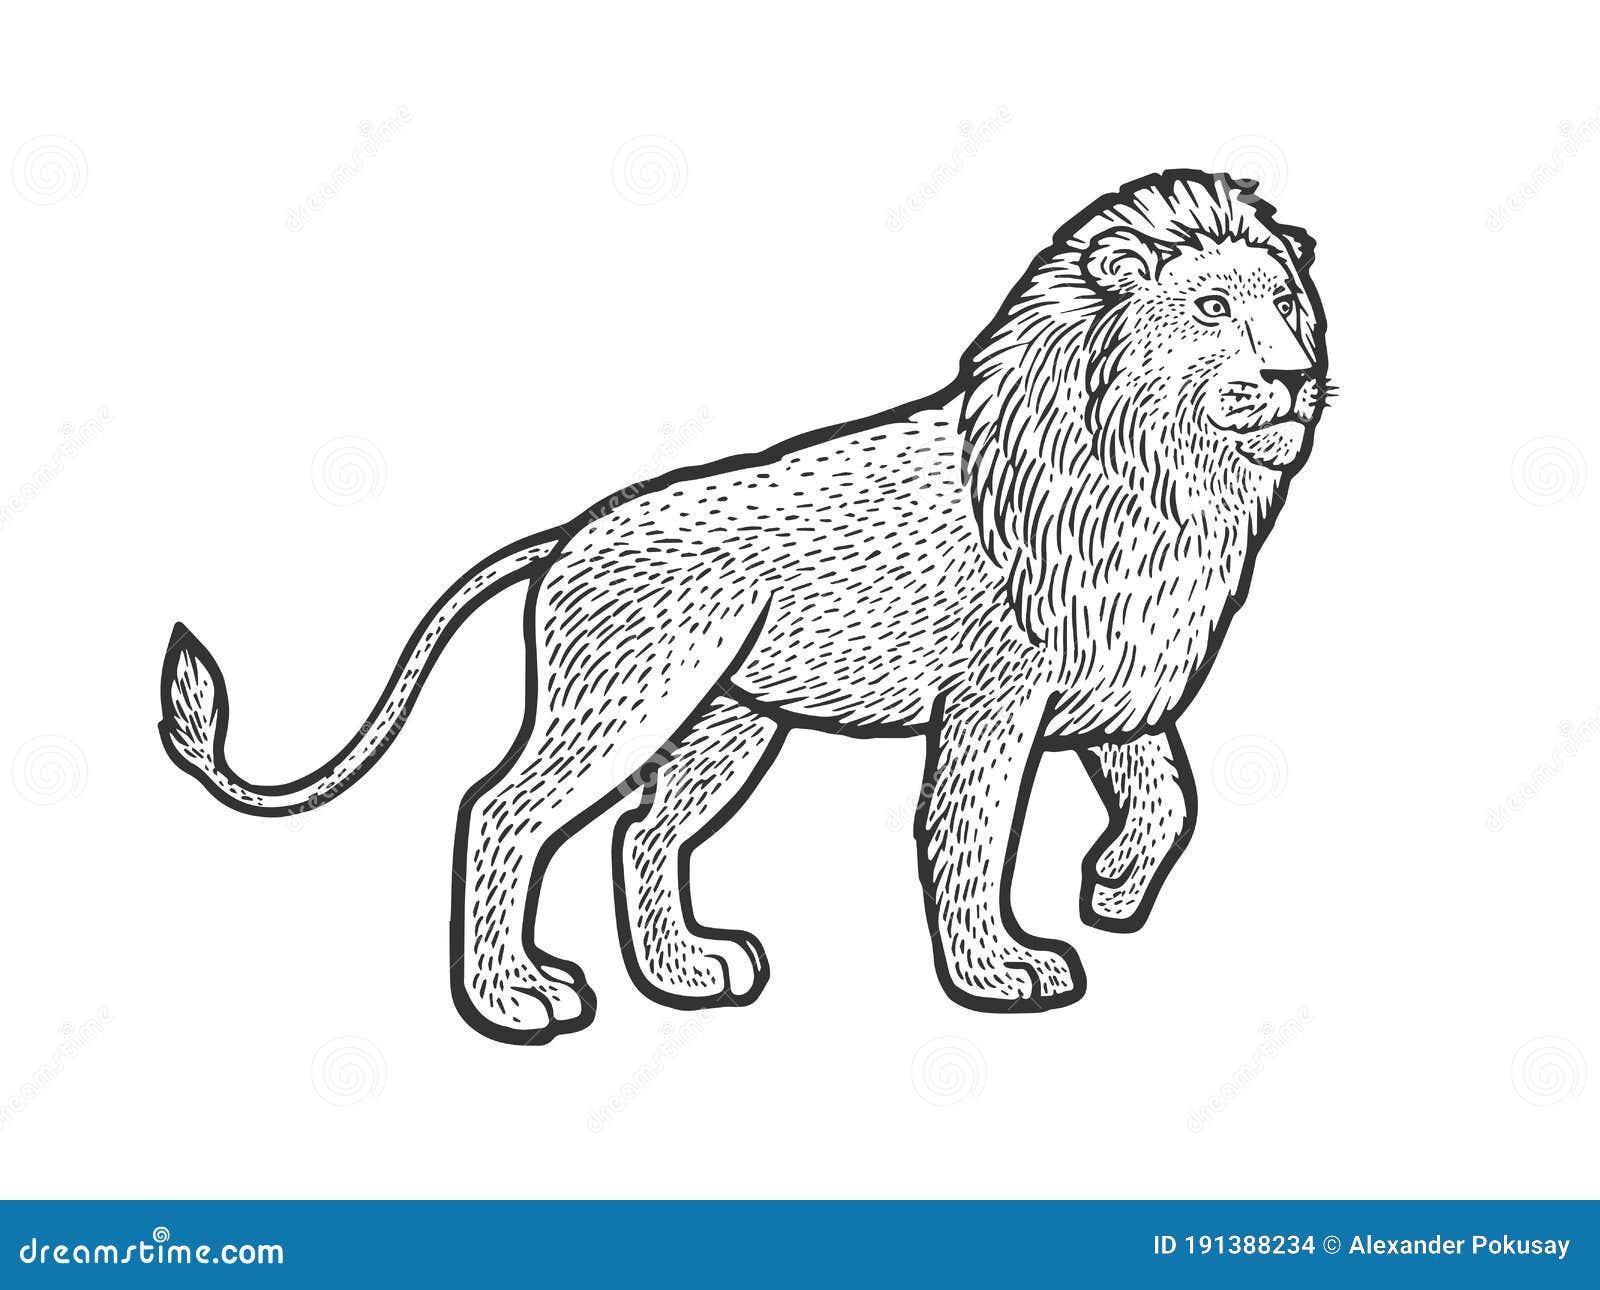 Walking Lion Sketch Vector Illustration Stock Vector - Illustration of ...